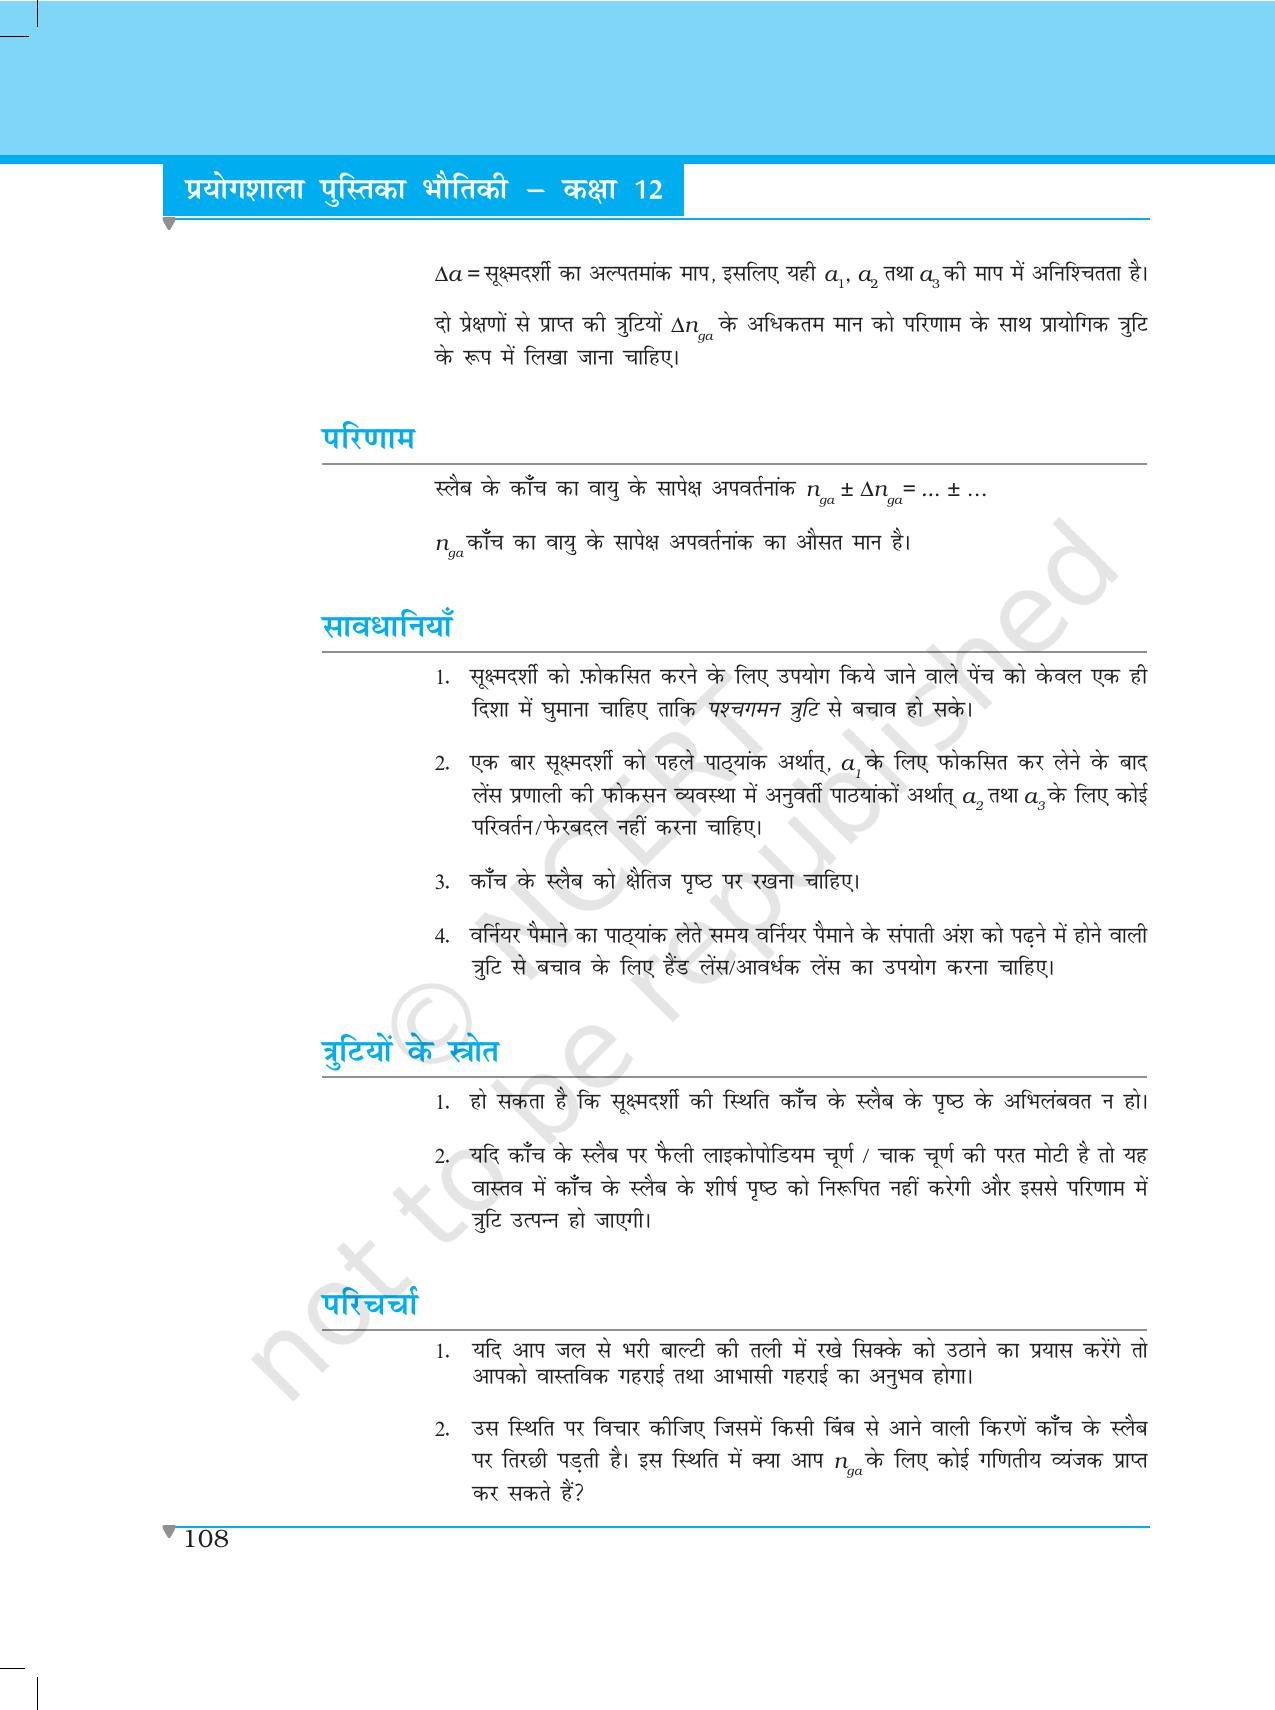 NCERT Laboratory Manuals for Class XII भौतिकी - प्रयोग (14 - 18) - Page 4